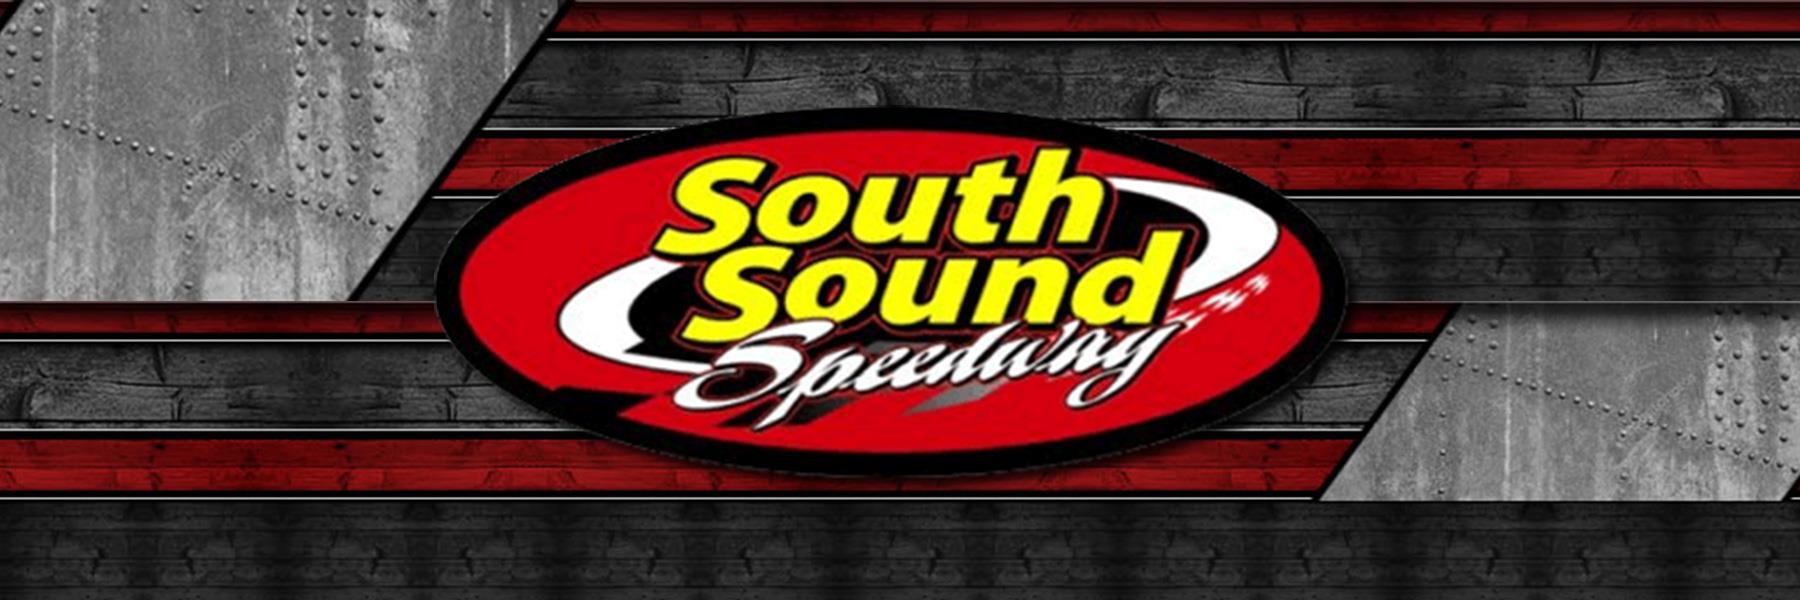 5/28/2022 - South Sound Speedway